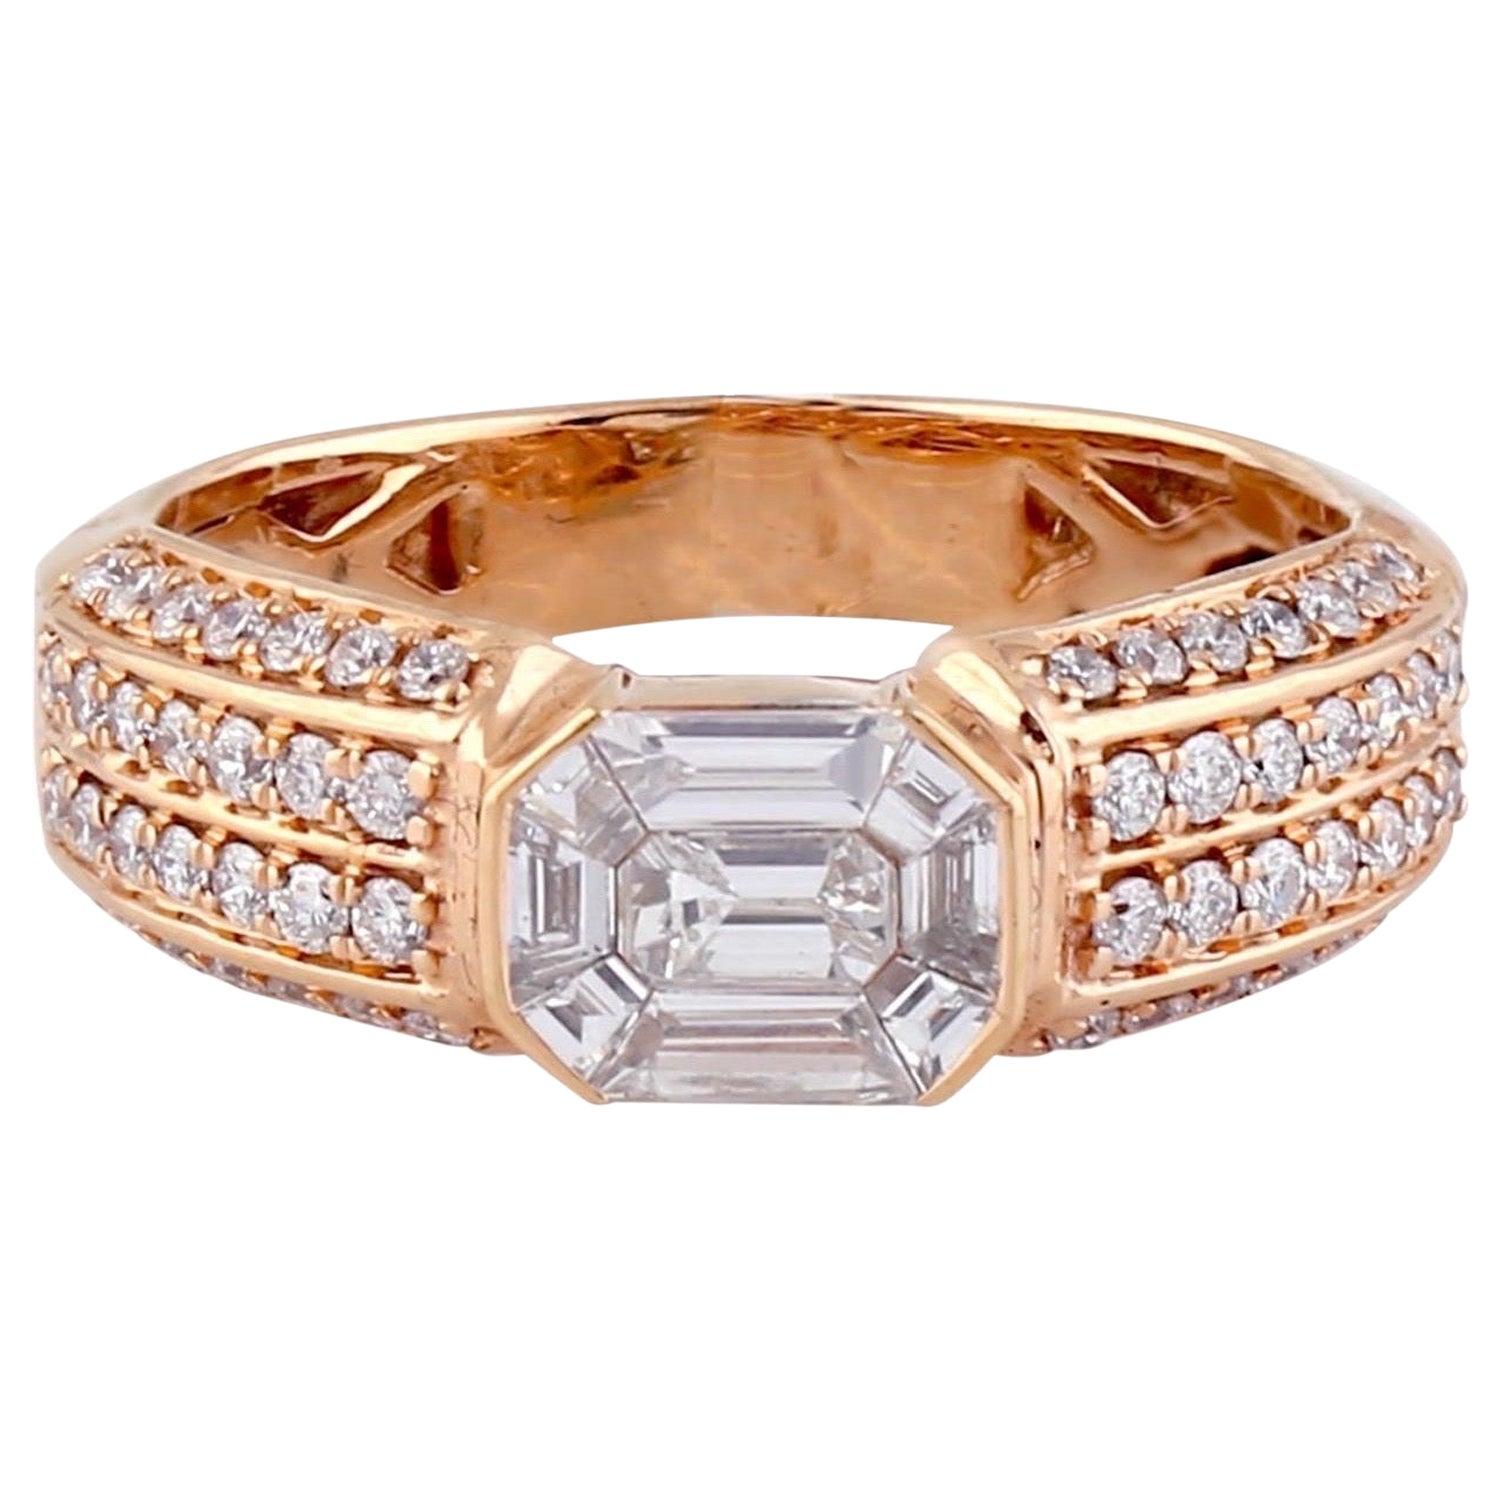 For Sale:  18 Karat Gold Diamond Engagement Ring